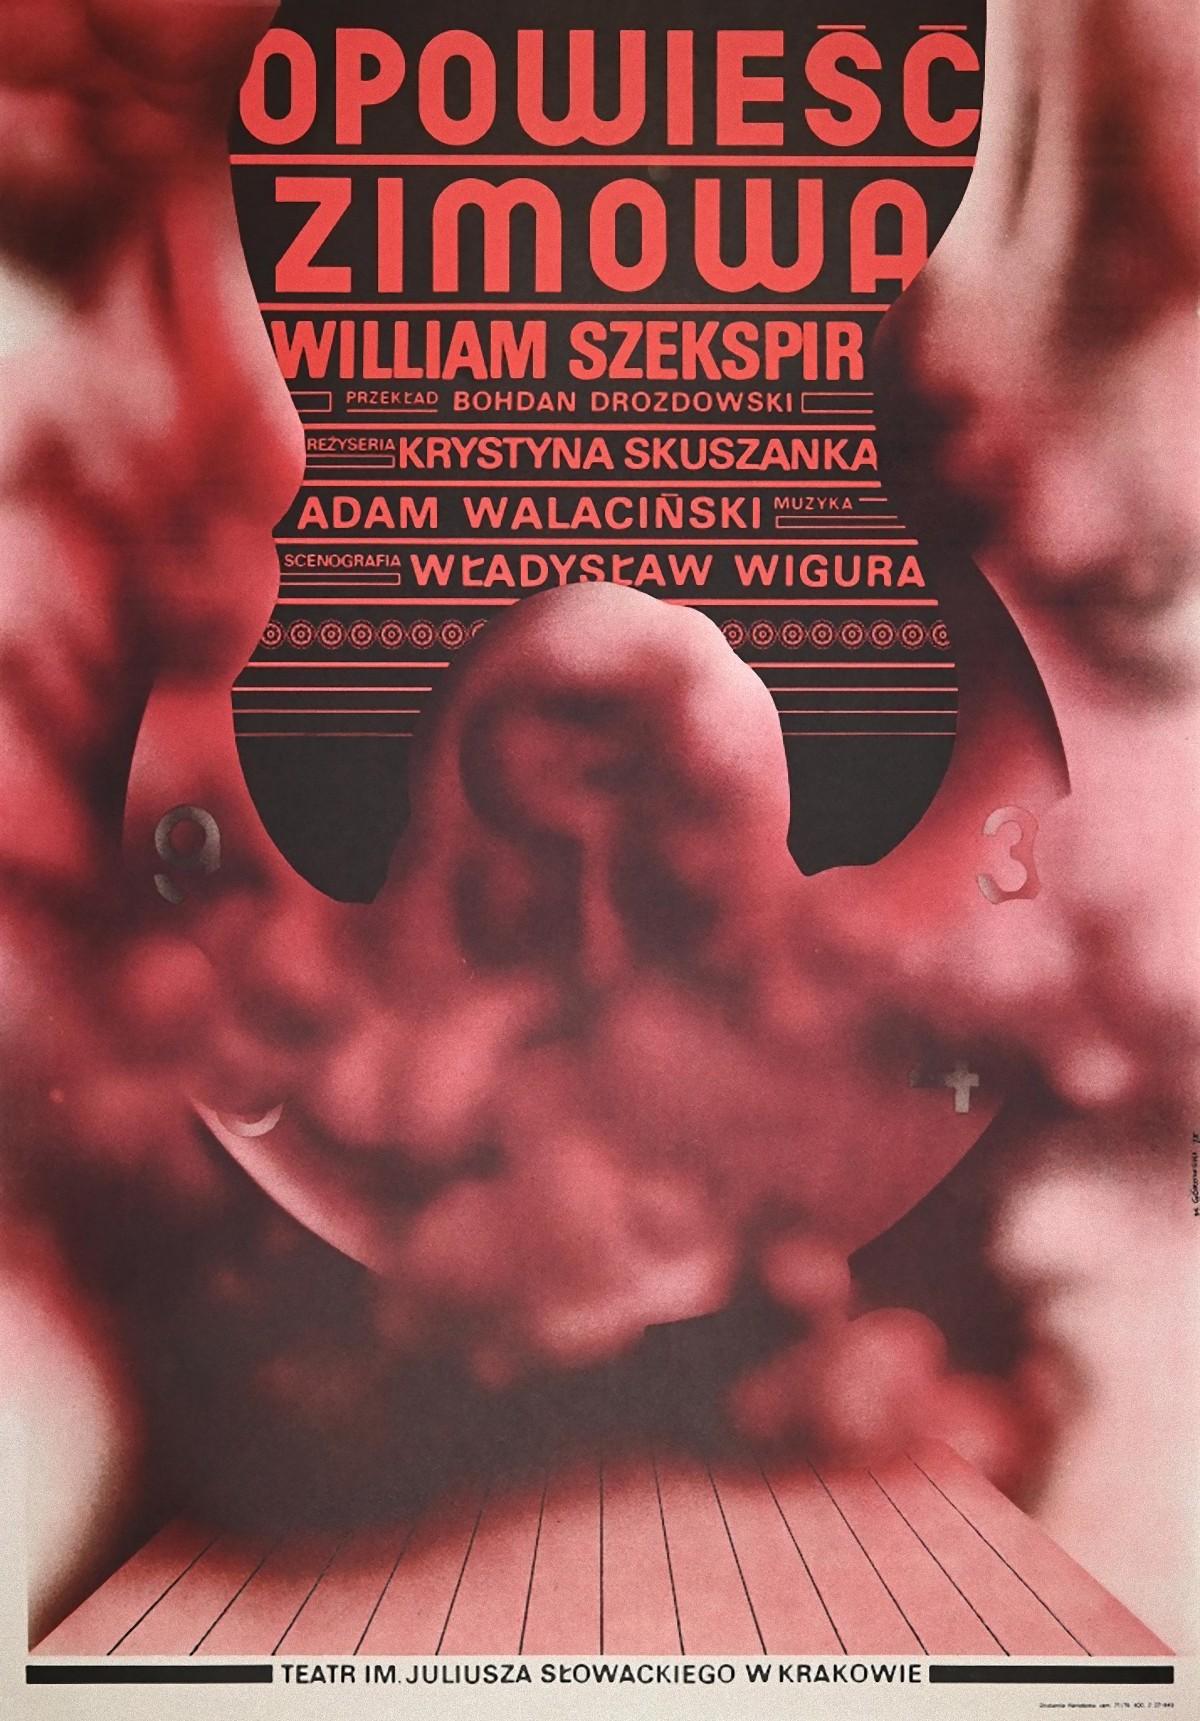 Call Girl - Vintage Poster by Jan Młodożeniec - 1973